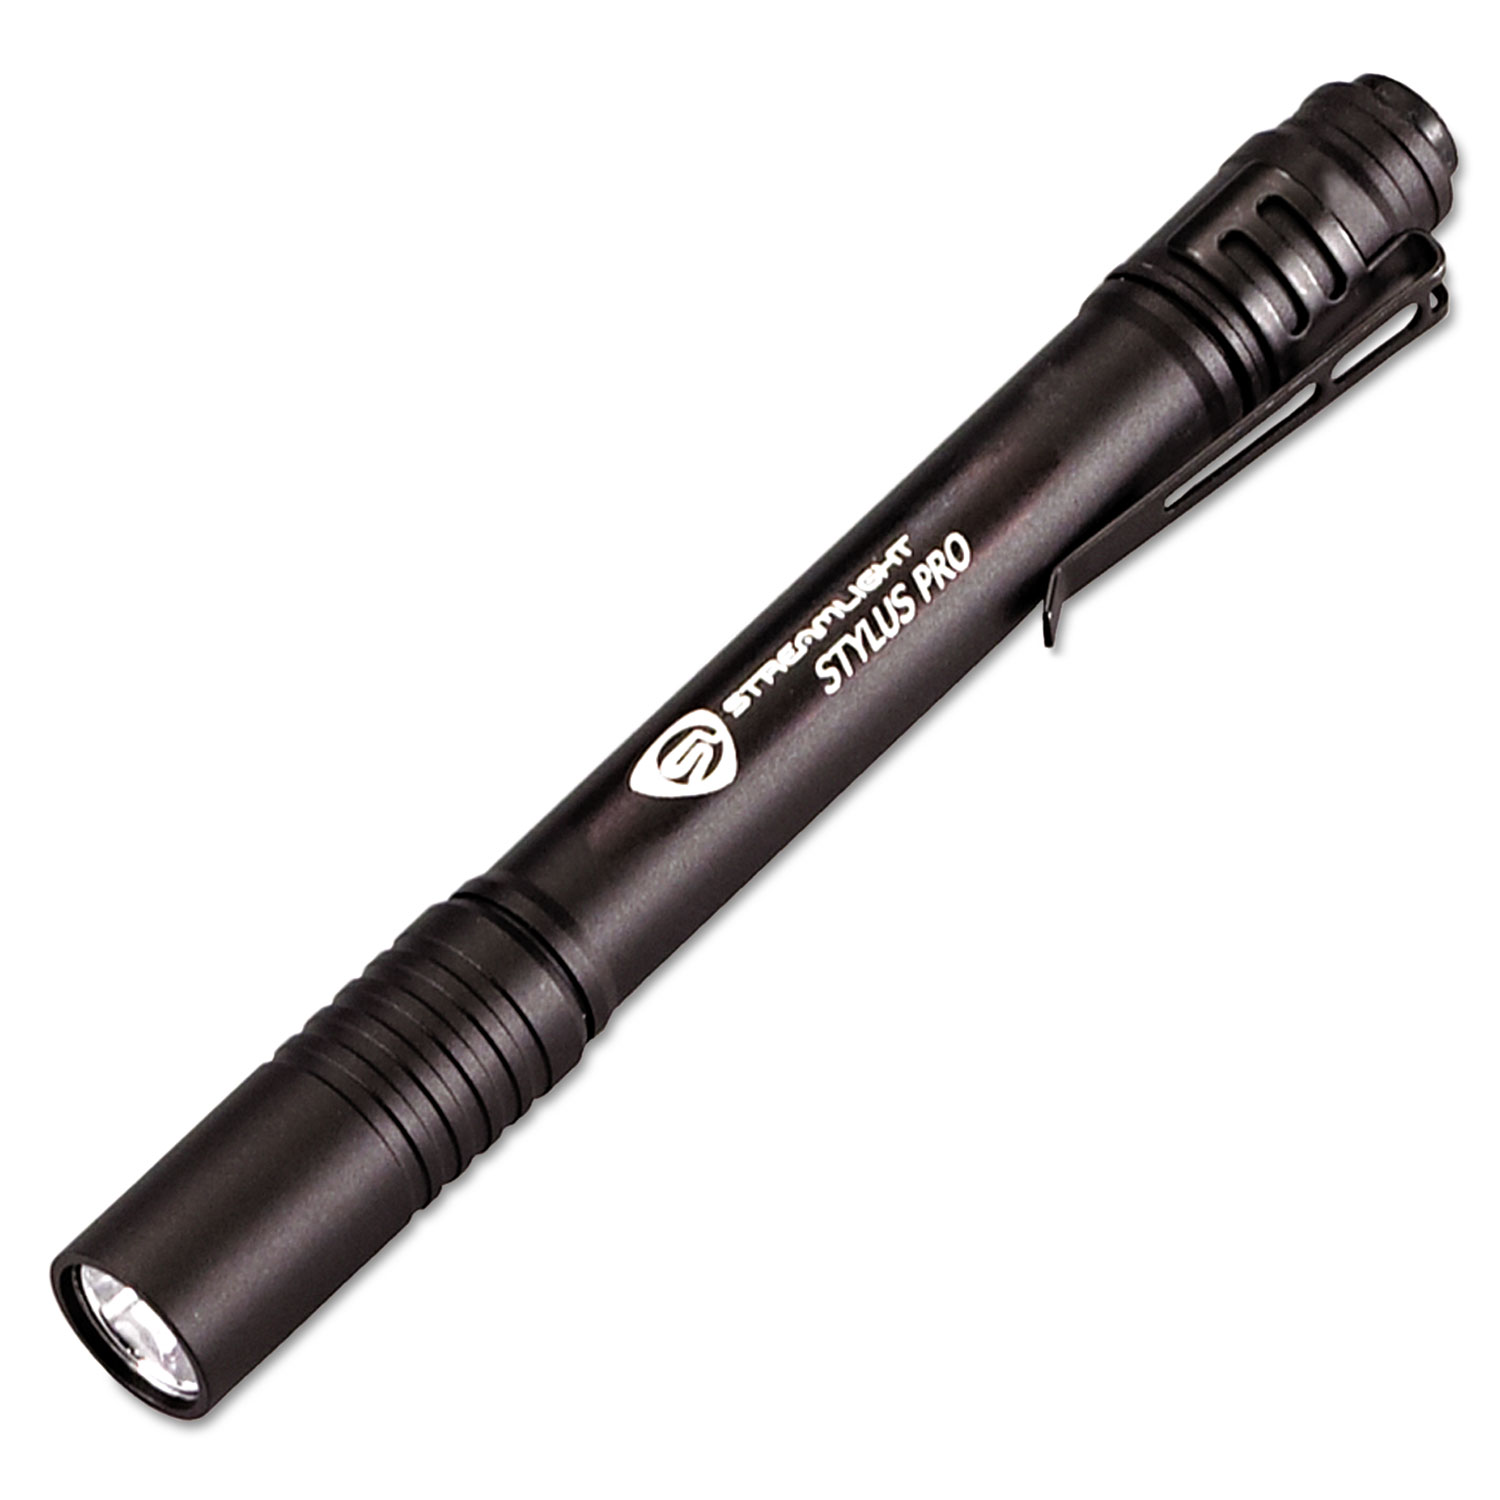 Stylus Pro LED Pen Light, 2 AAA Batteries (Included), Black